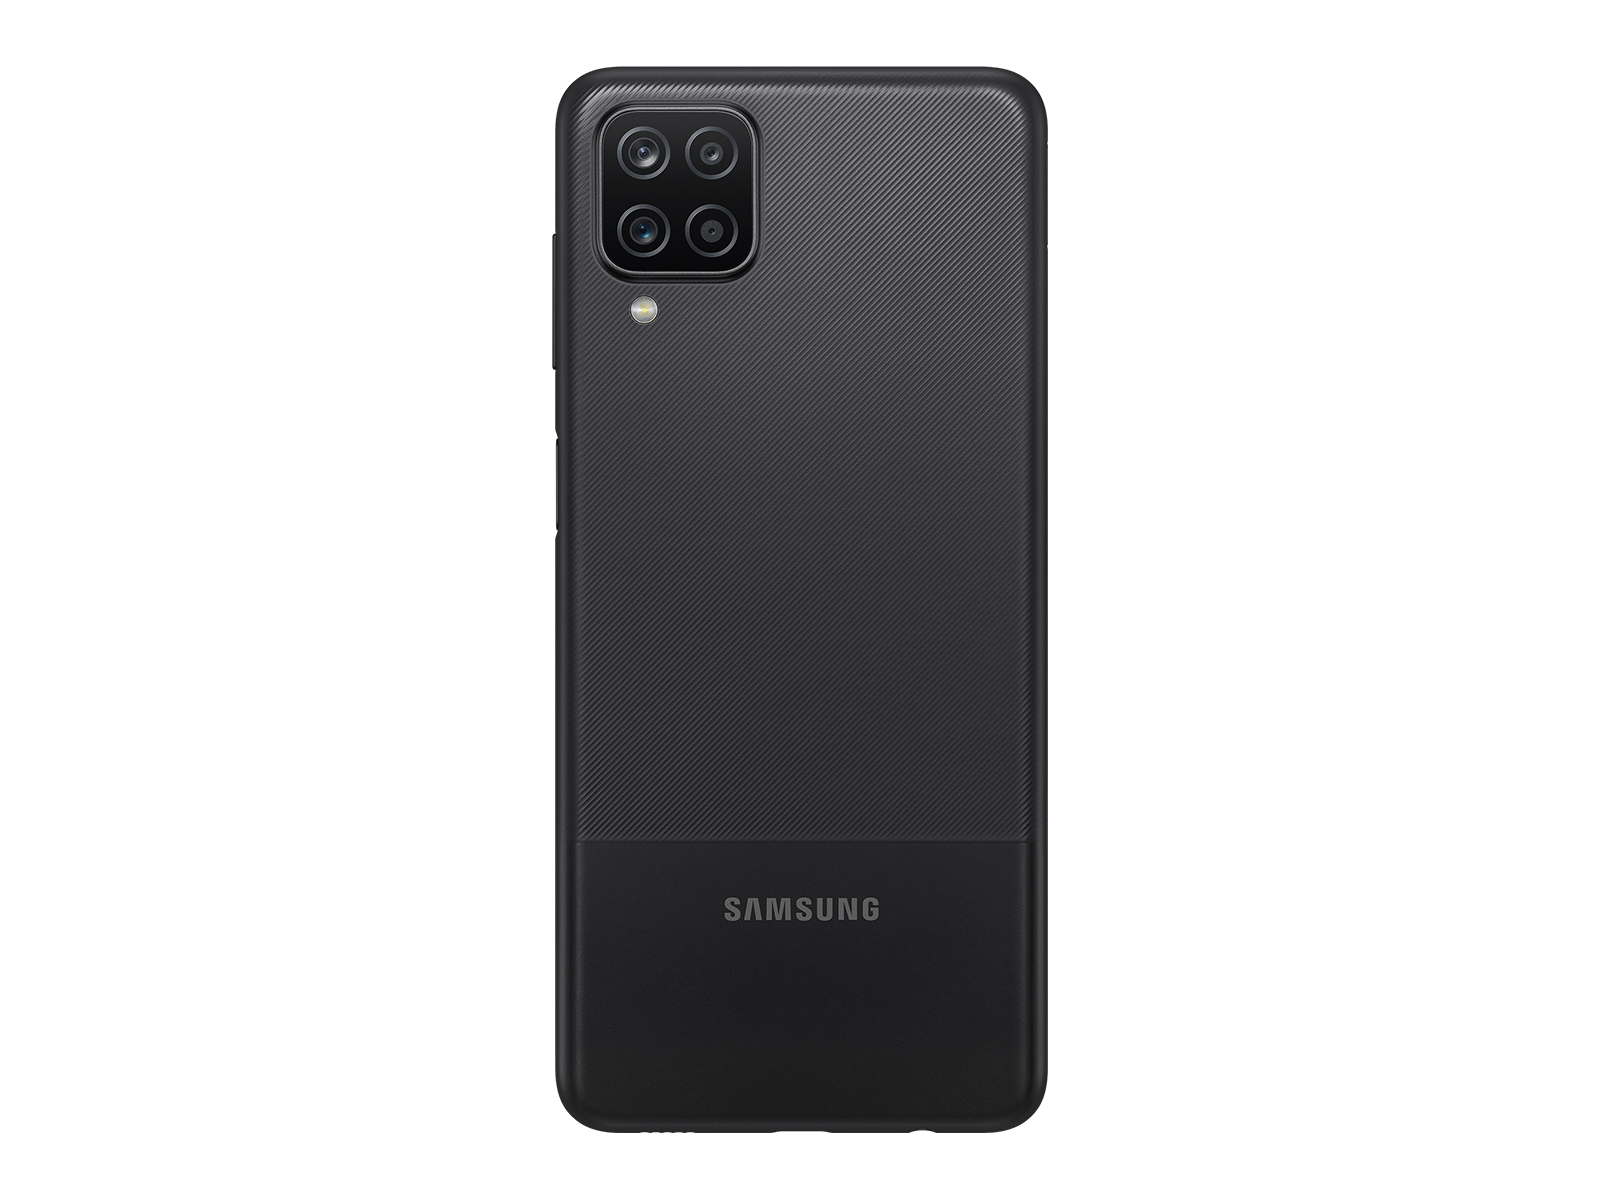 Confidence - Samsung Galaxy A12